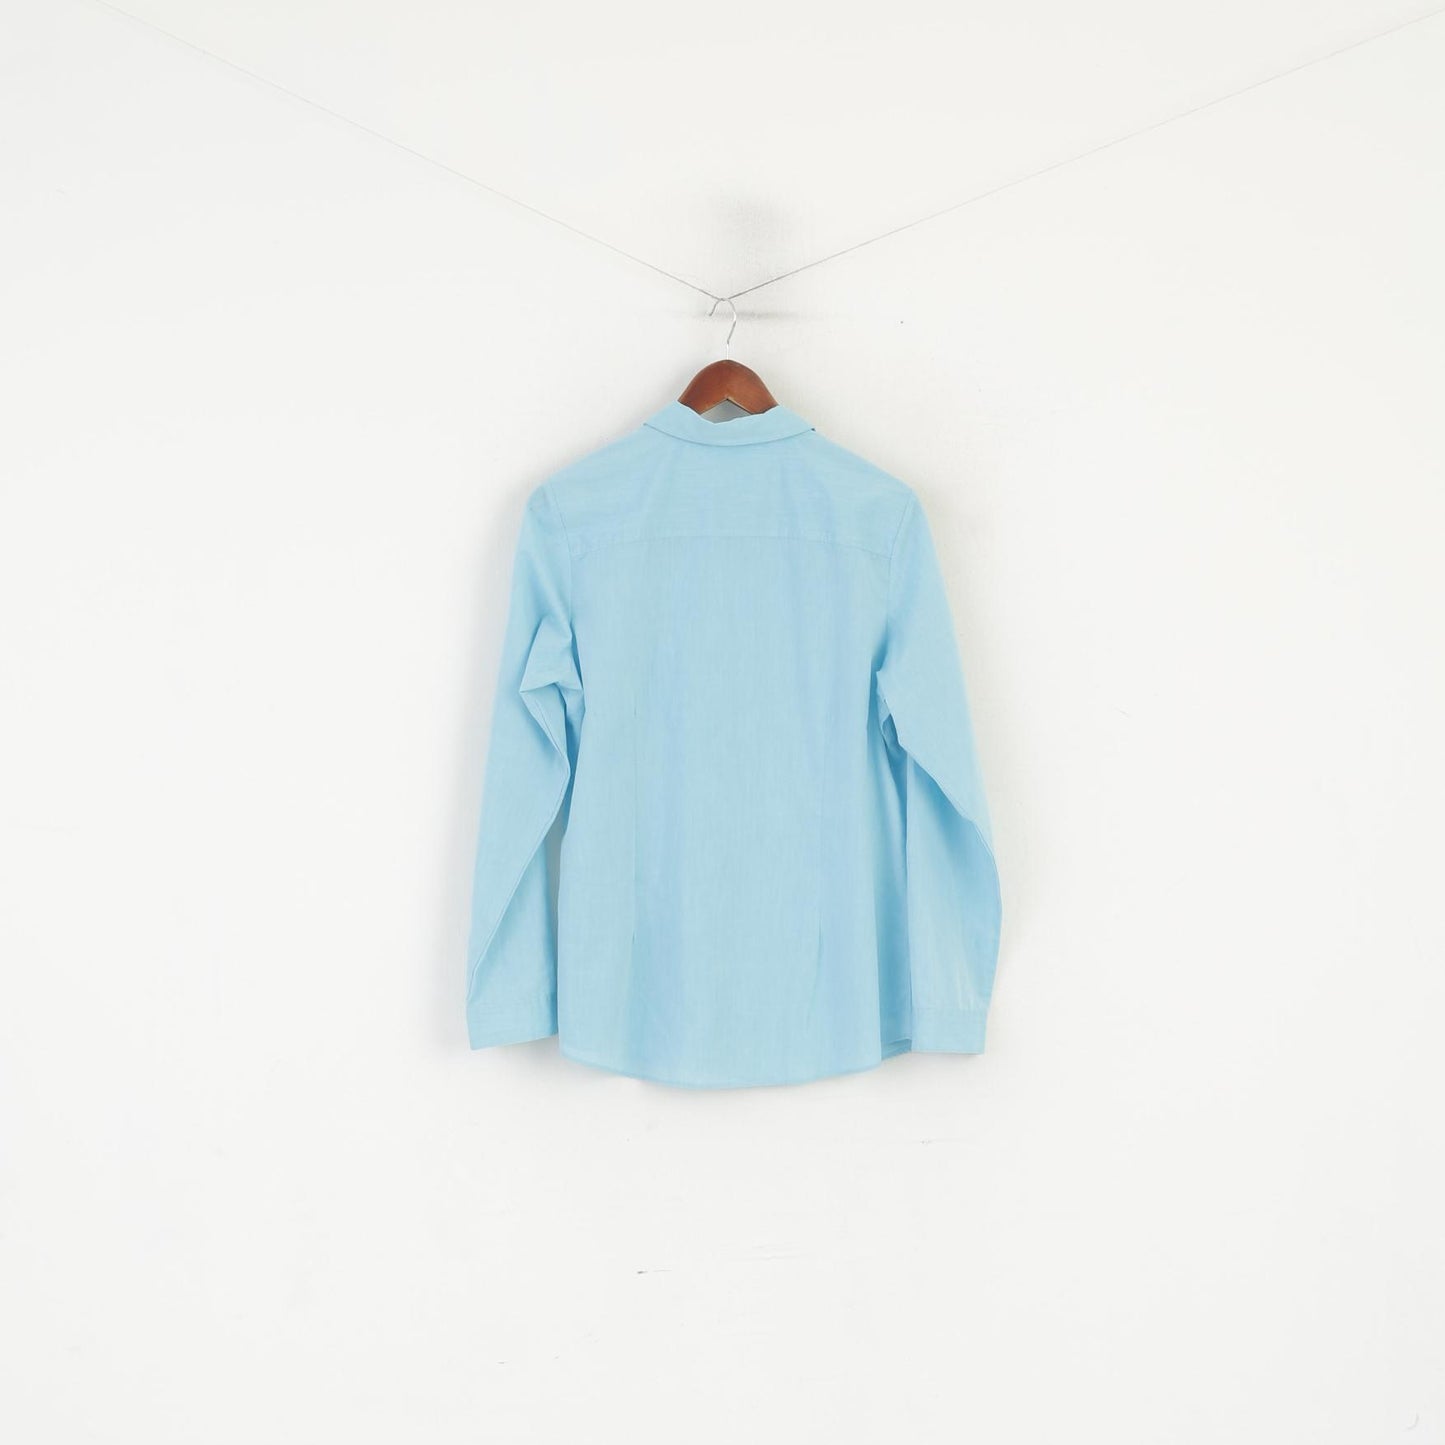 Cotton Traders Women 16 XL Casual Shirt Turquoise Aqua Cotton Plain Long Sleeve Top